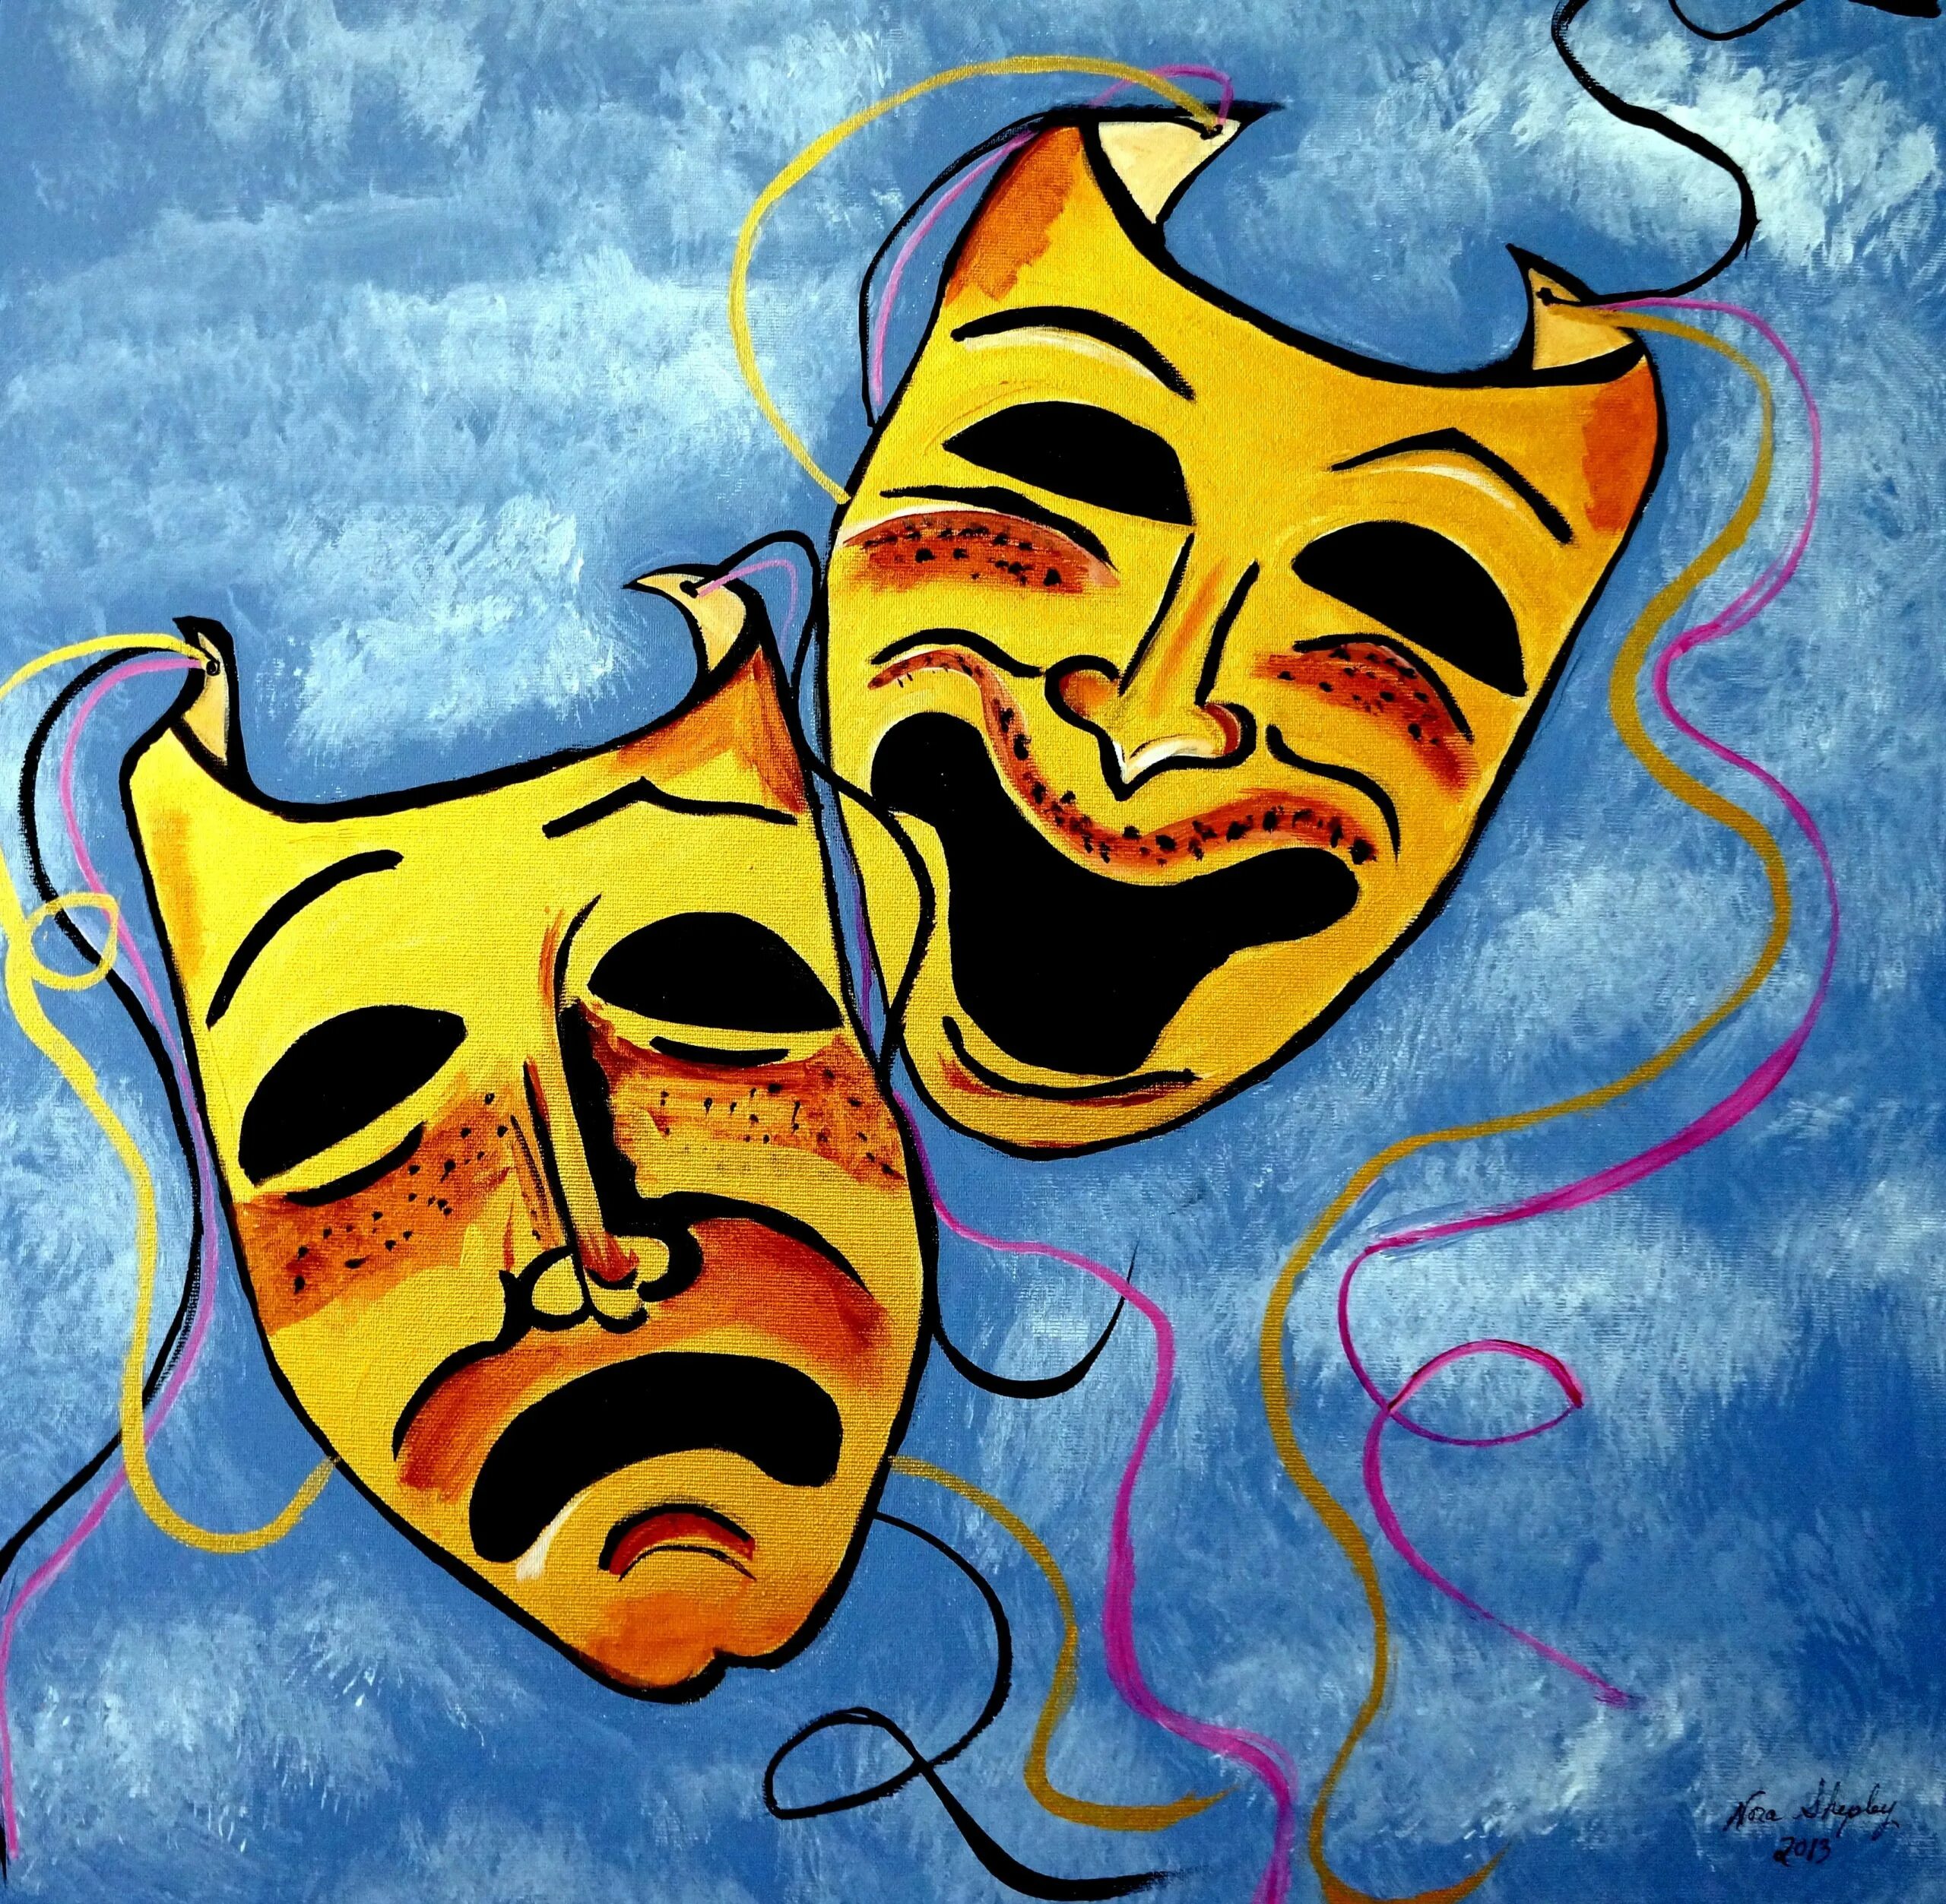 Маски театра рисунок. Театральные маски. Театральные маски комедия и трагедия. Яркие театральные маски. Театральная маска рисунок.